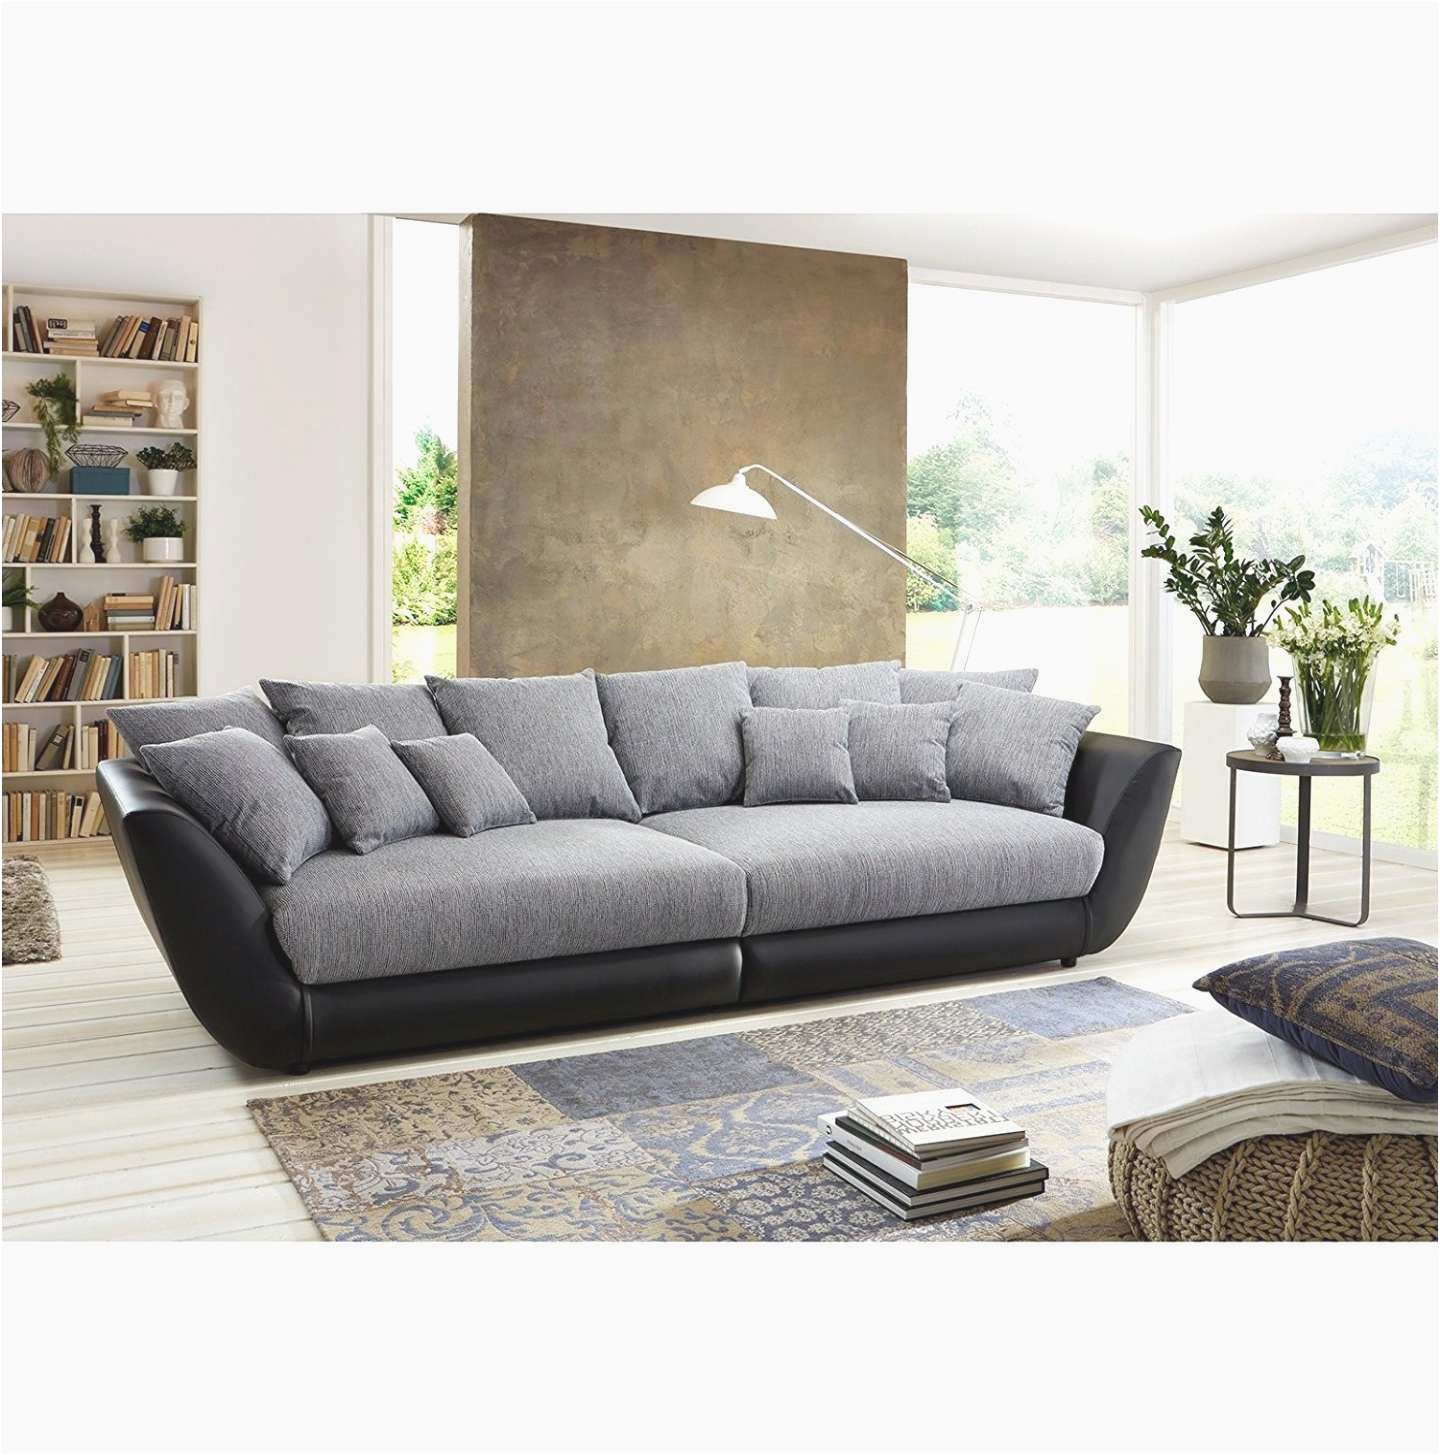 Sofa L form Ikea sofa L form Frisch U sofa Xxl Schön Big sofa L form Luxus U